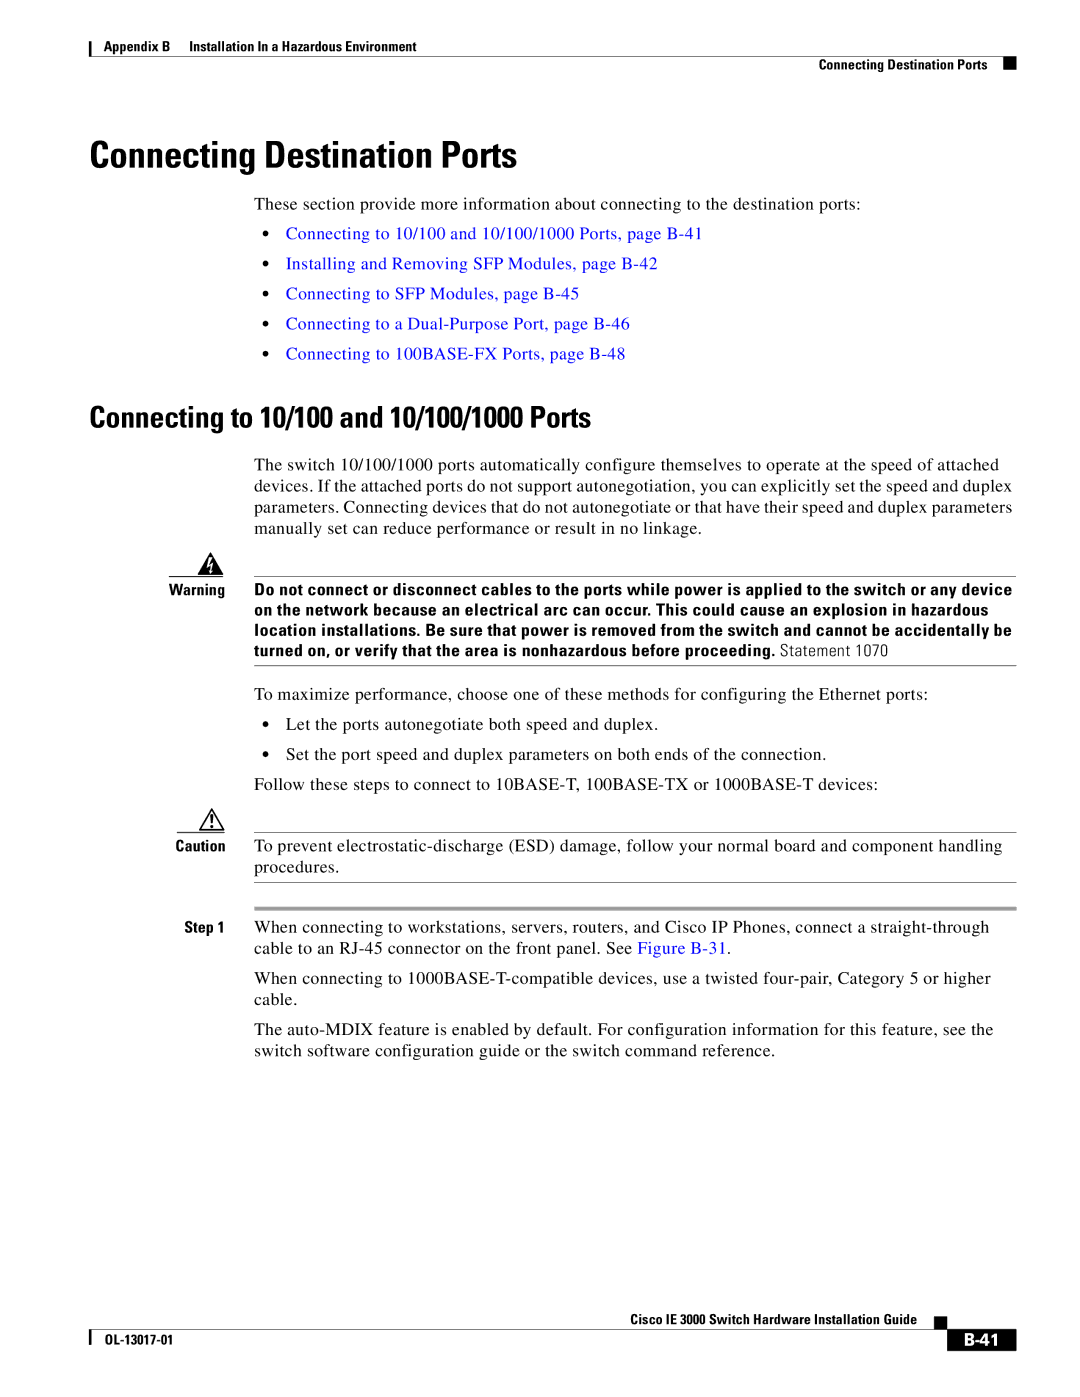 Cisco Systems IE 3000 Series, IEM30004PC manual Connecting Destination Ports 